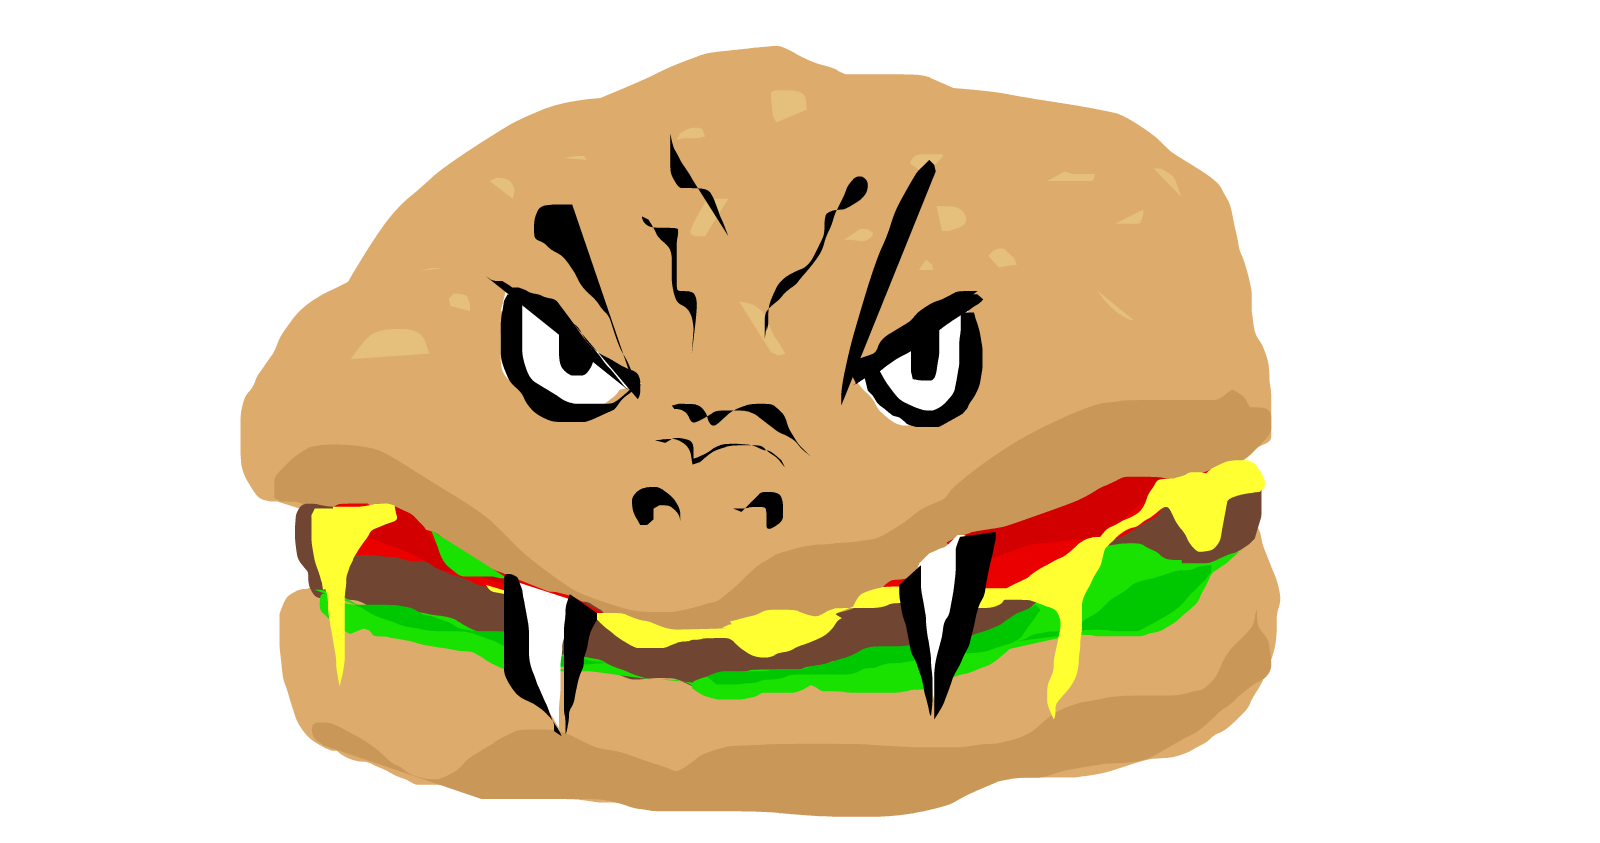 Burger hates you